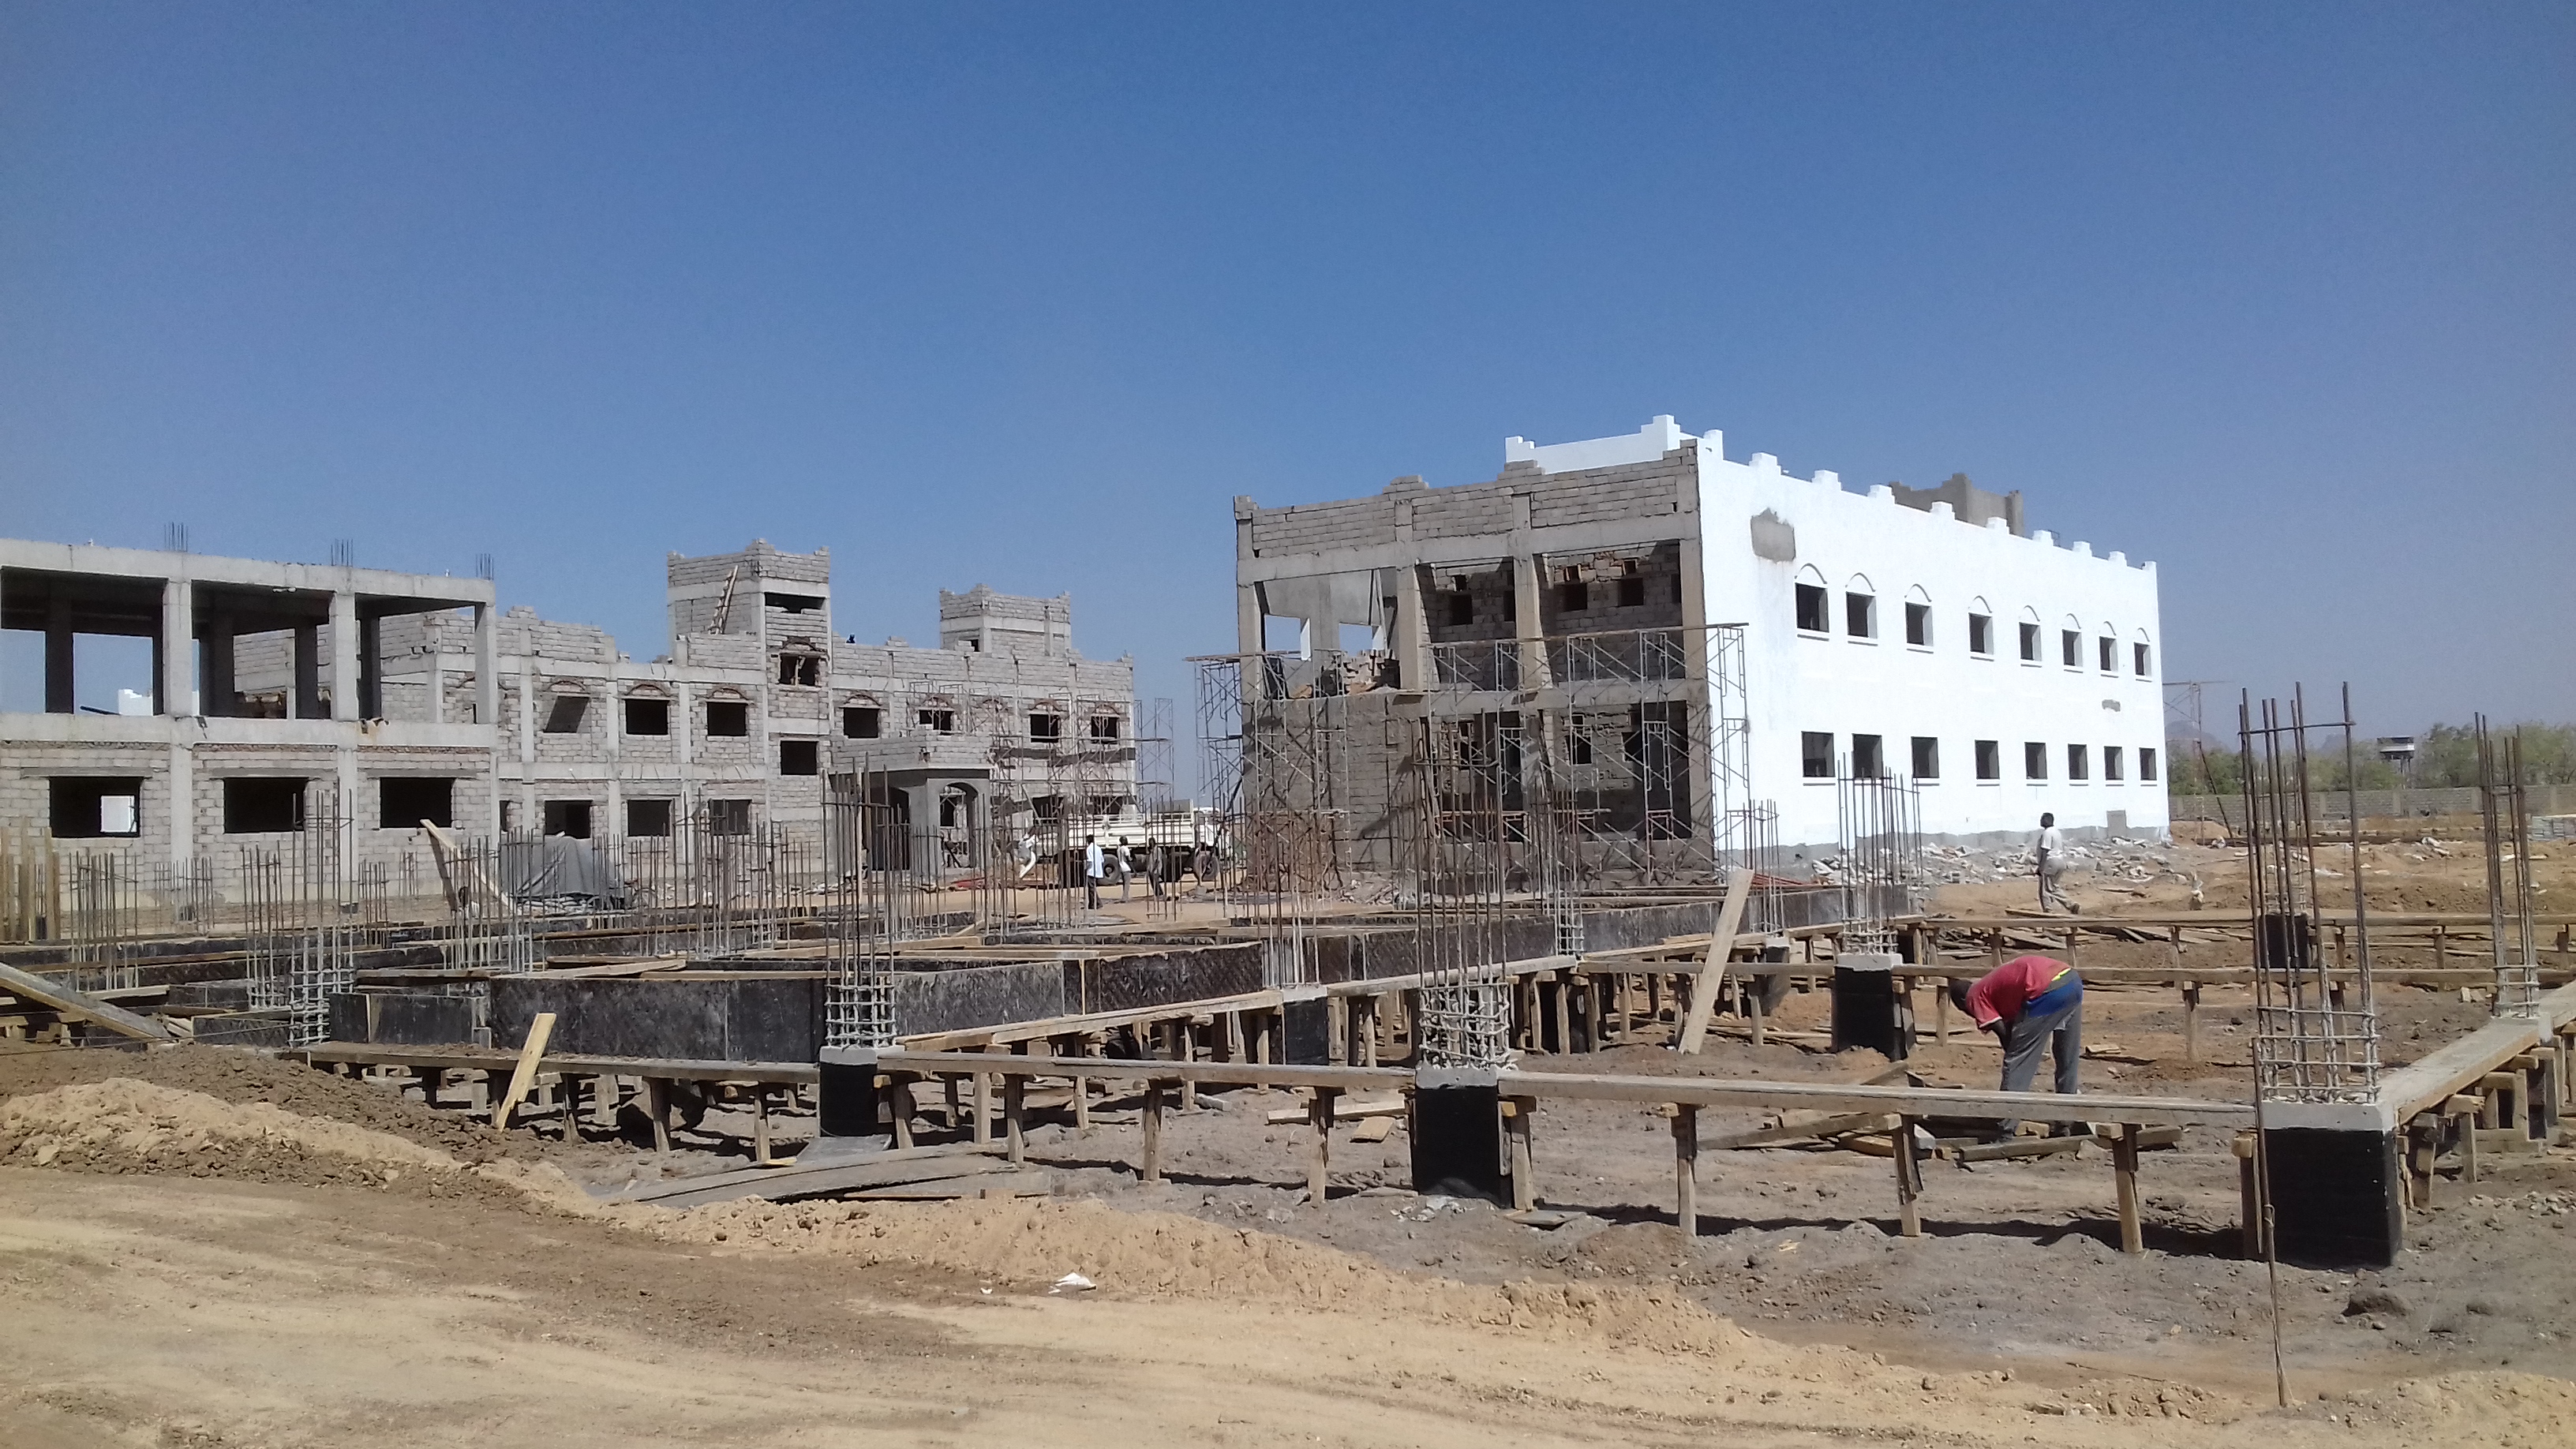 Dar Al-Khair orphanage project, funded by Kuwait's Al-Rahma international, the biggest project of its kind in Kasla, eastern Sudan